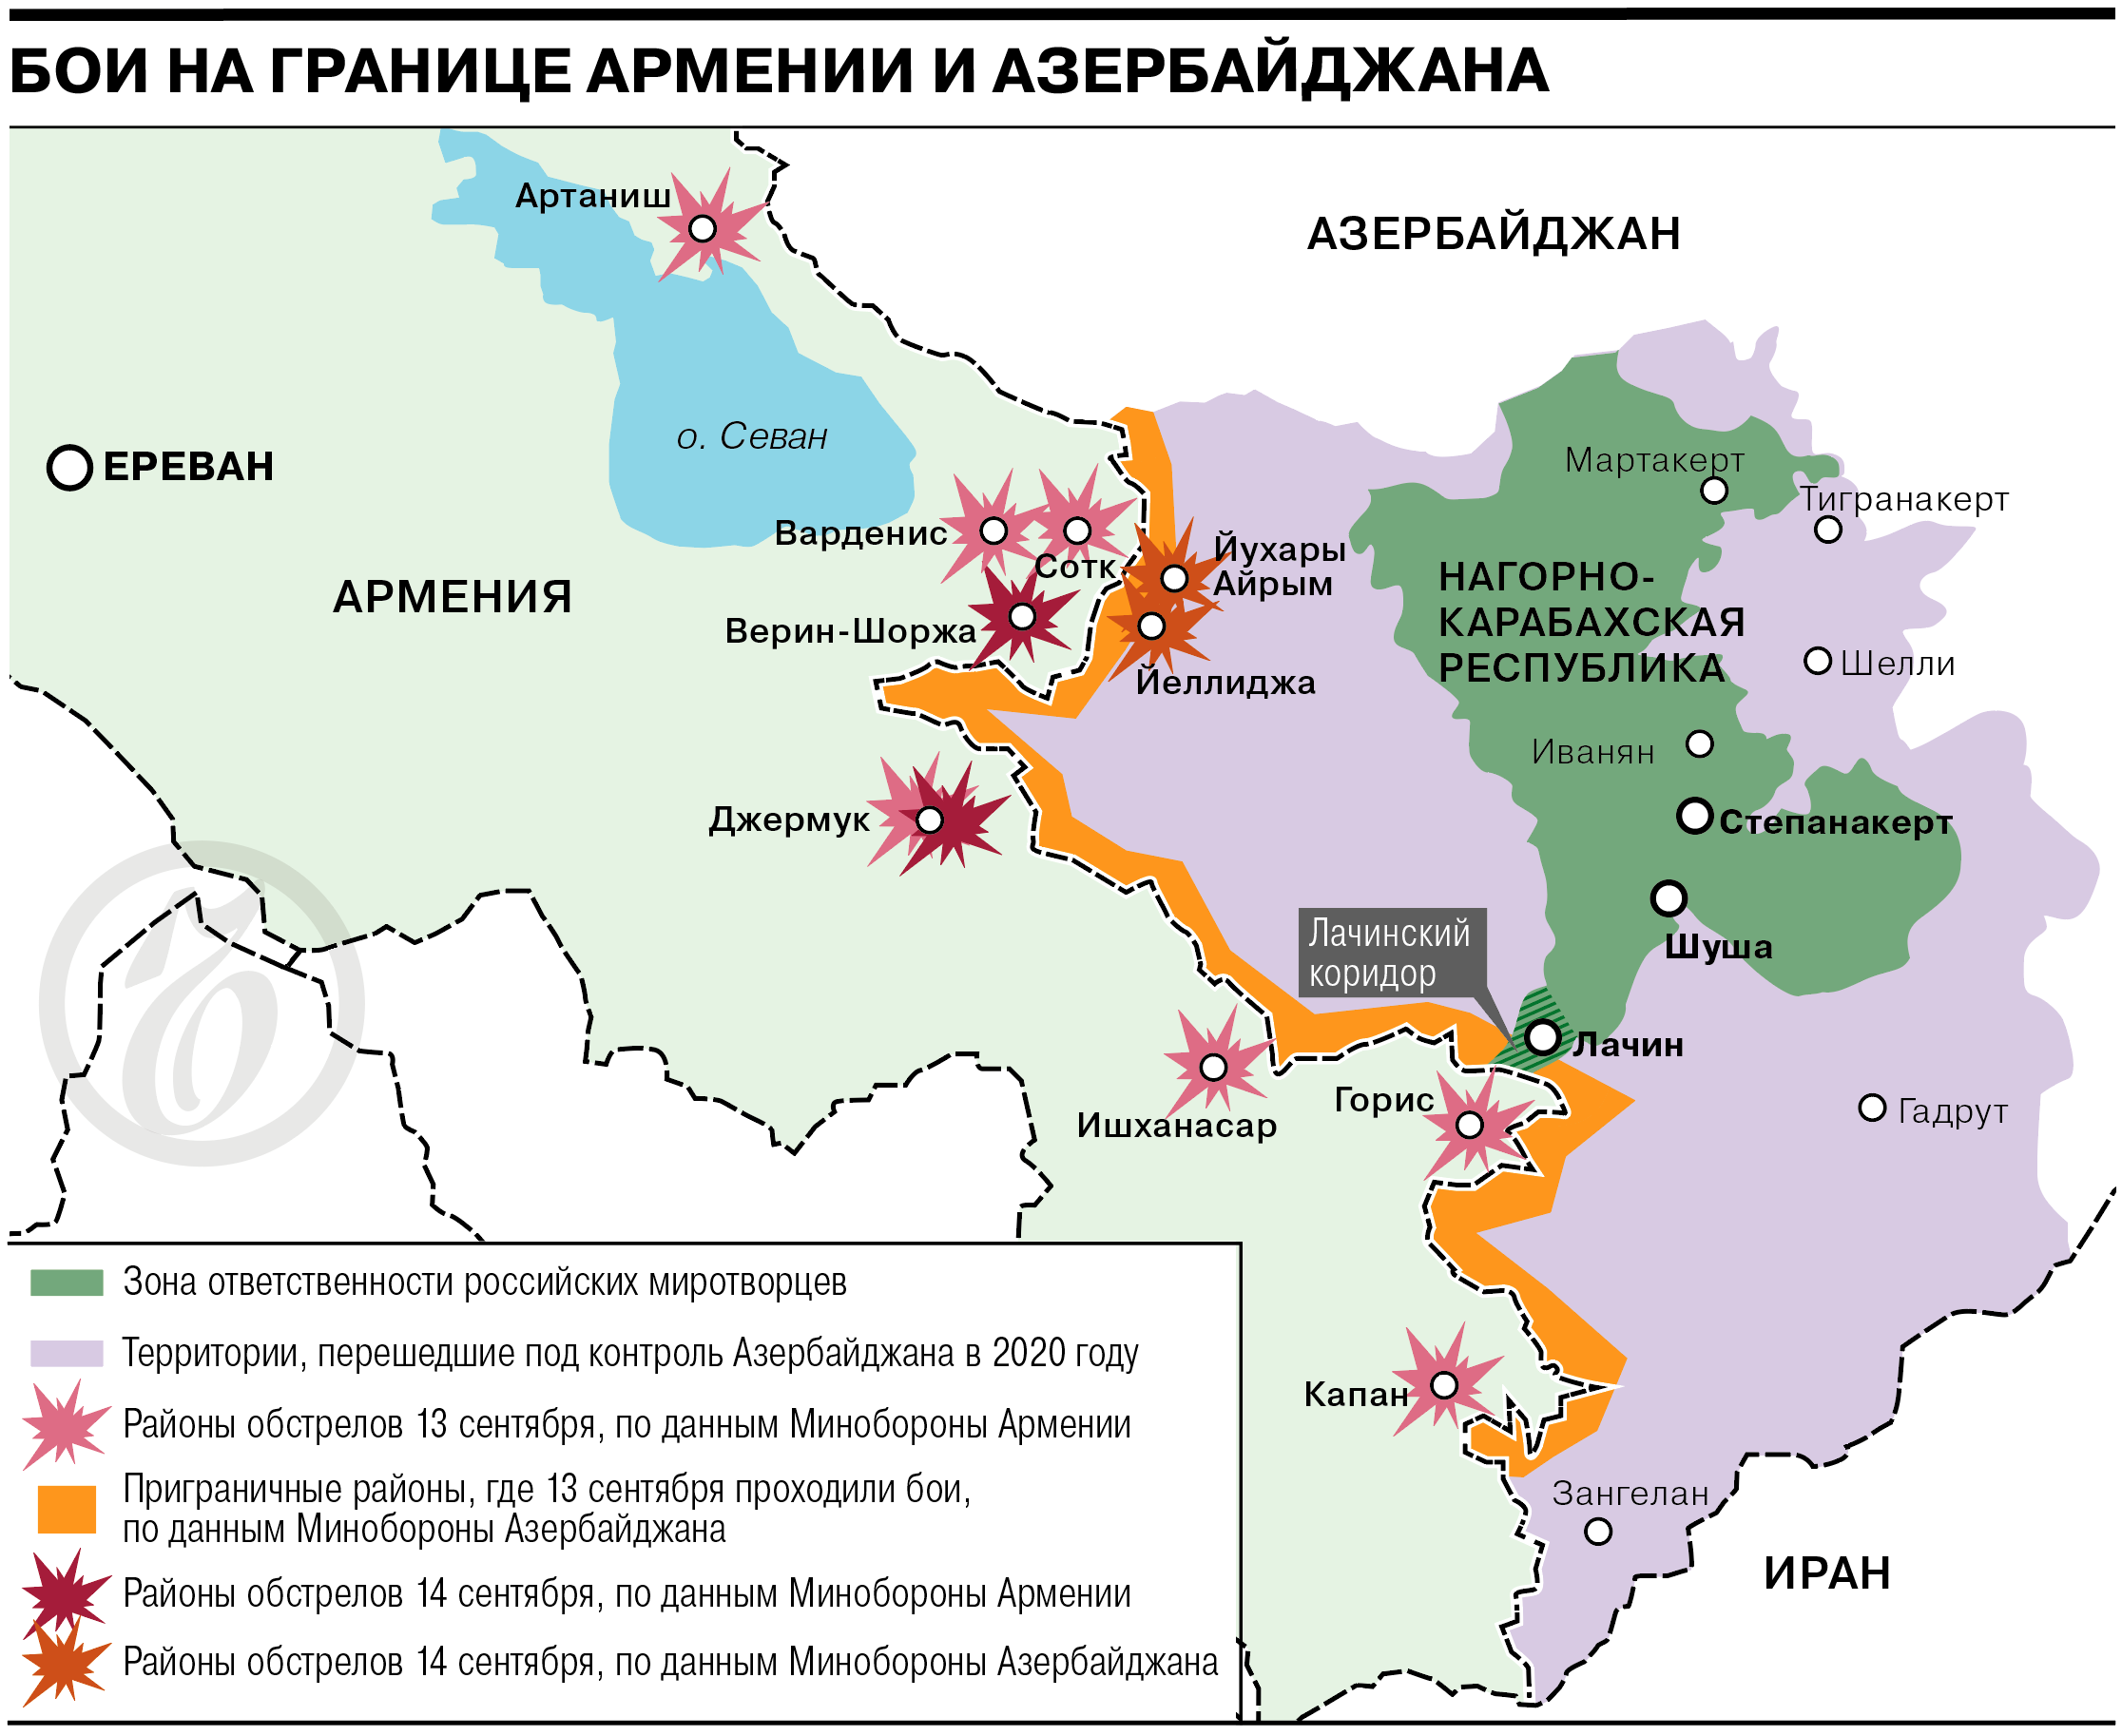 Война в армении и азербайджана телеграмм фото 4